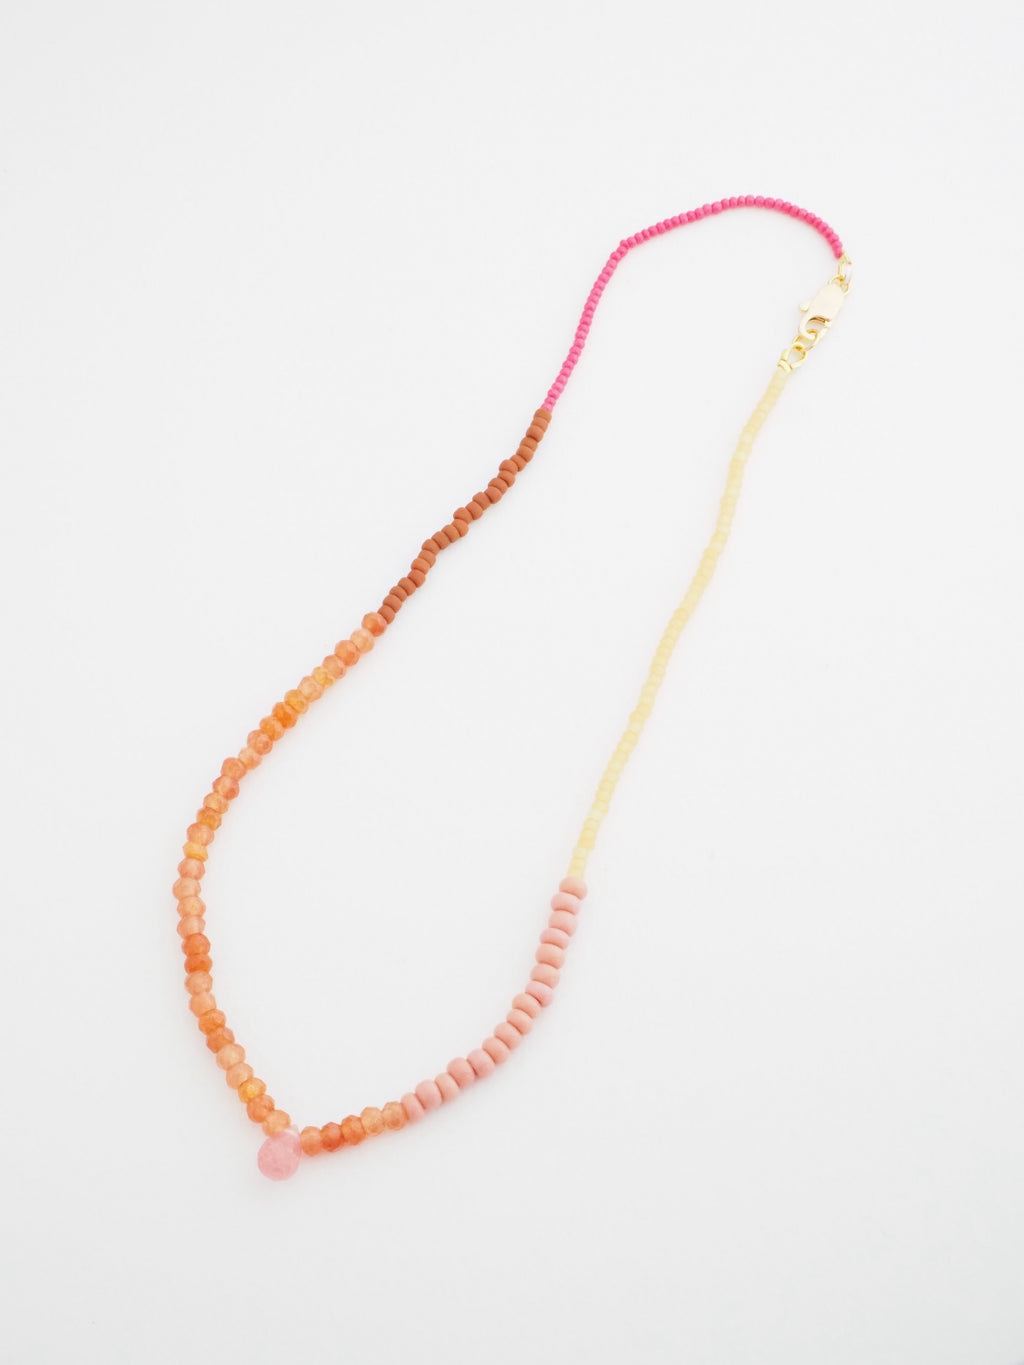 Hydrangea Ranger - Beaded necklace orange with pink stone #3